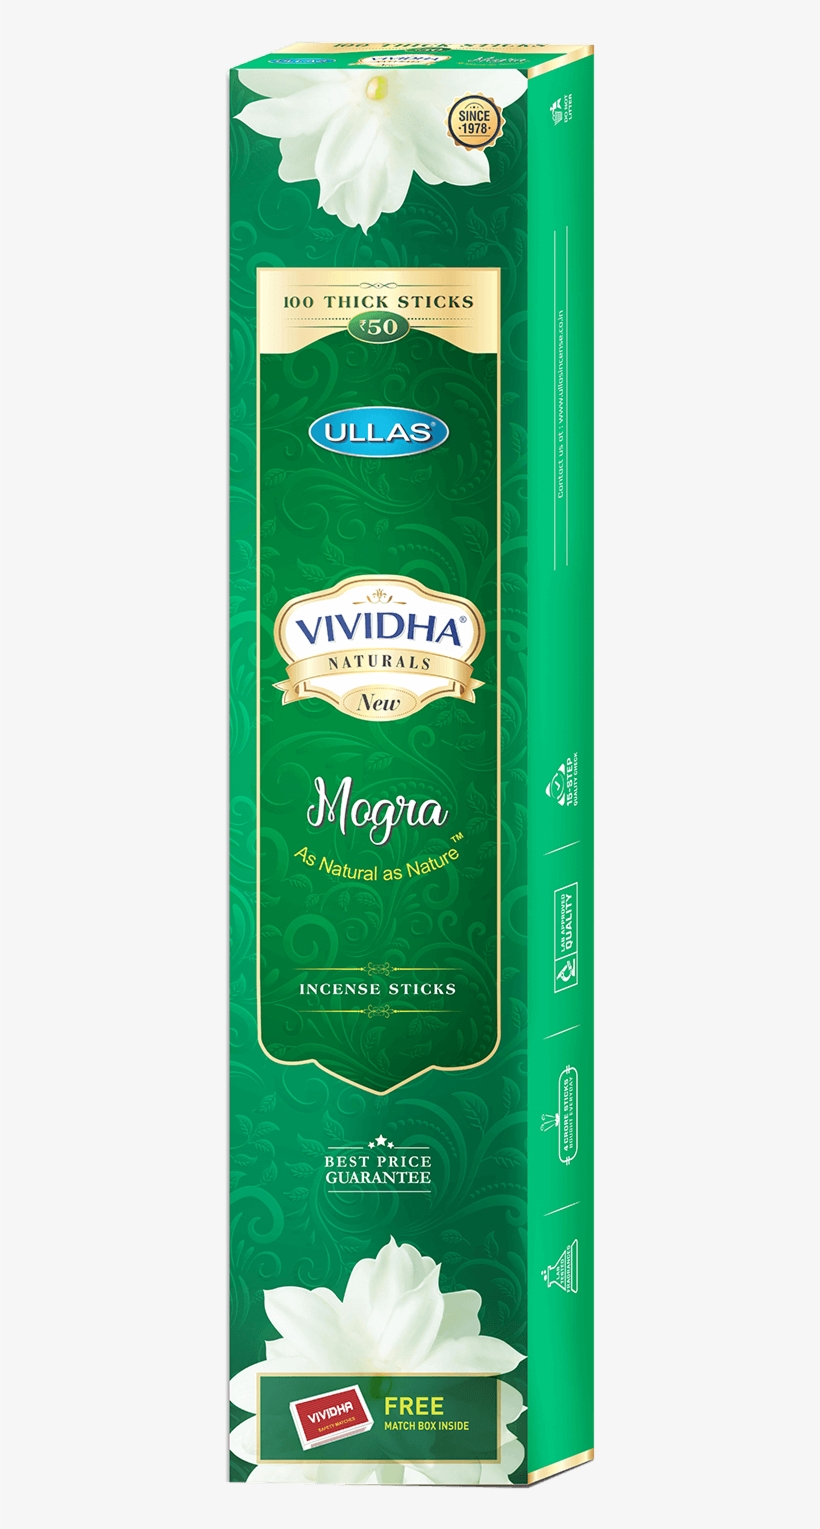 Vividha Mogra 100 Sticks Box - Nilgiri Tea, transparent png #8981756